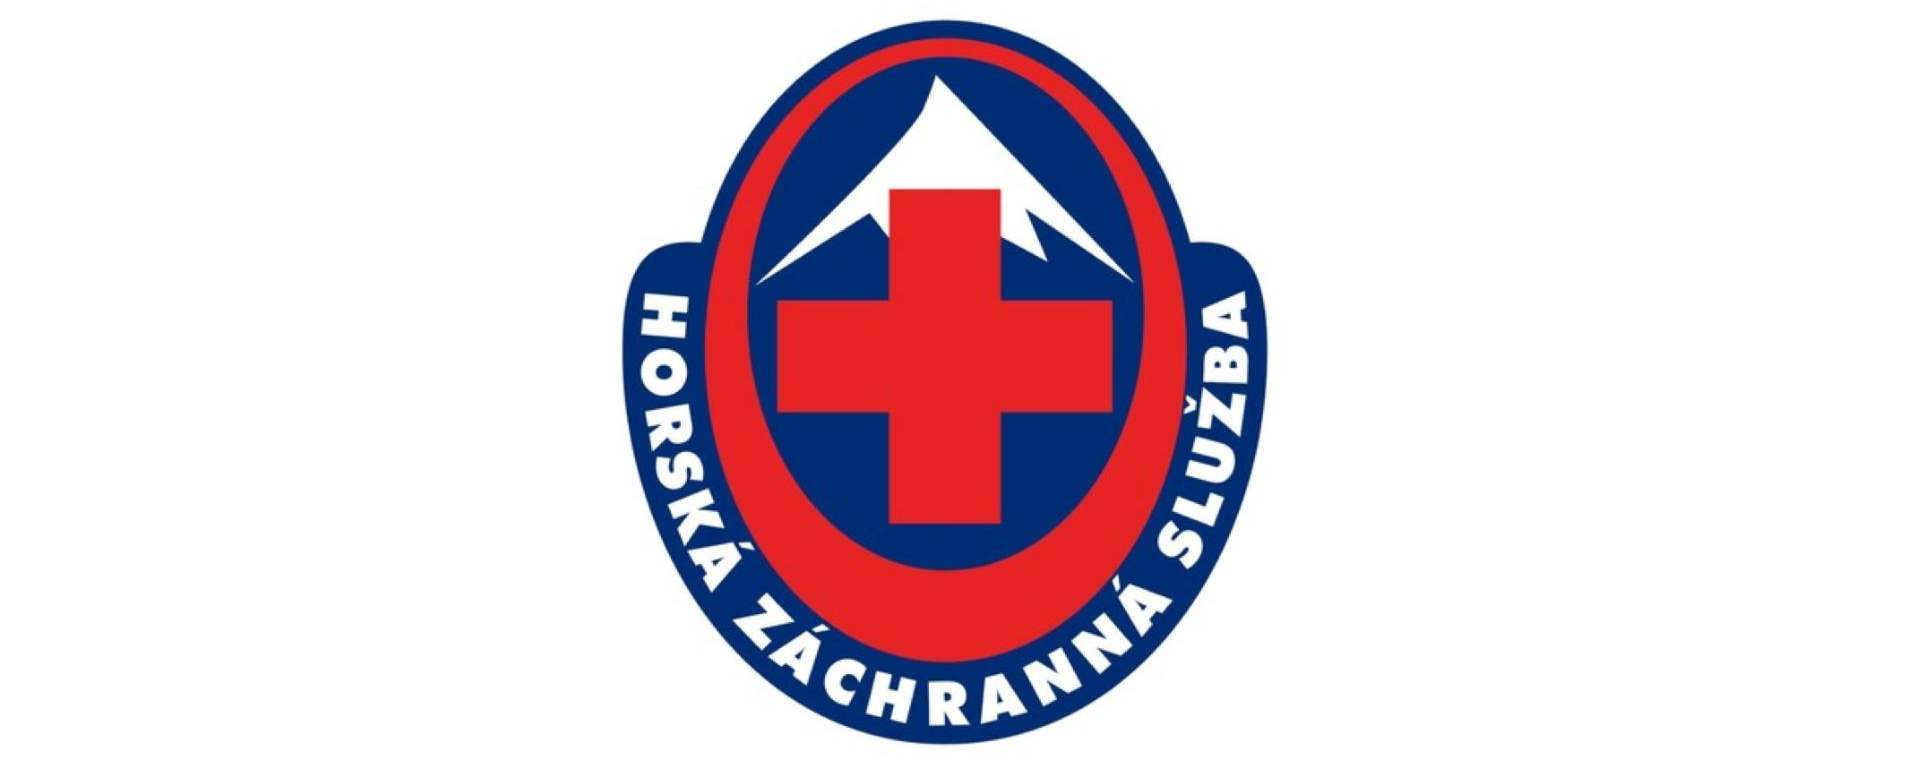 Horska Zachranna Służba